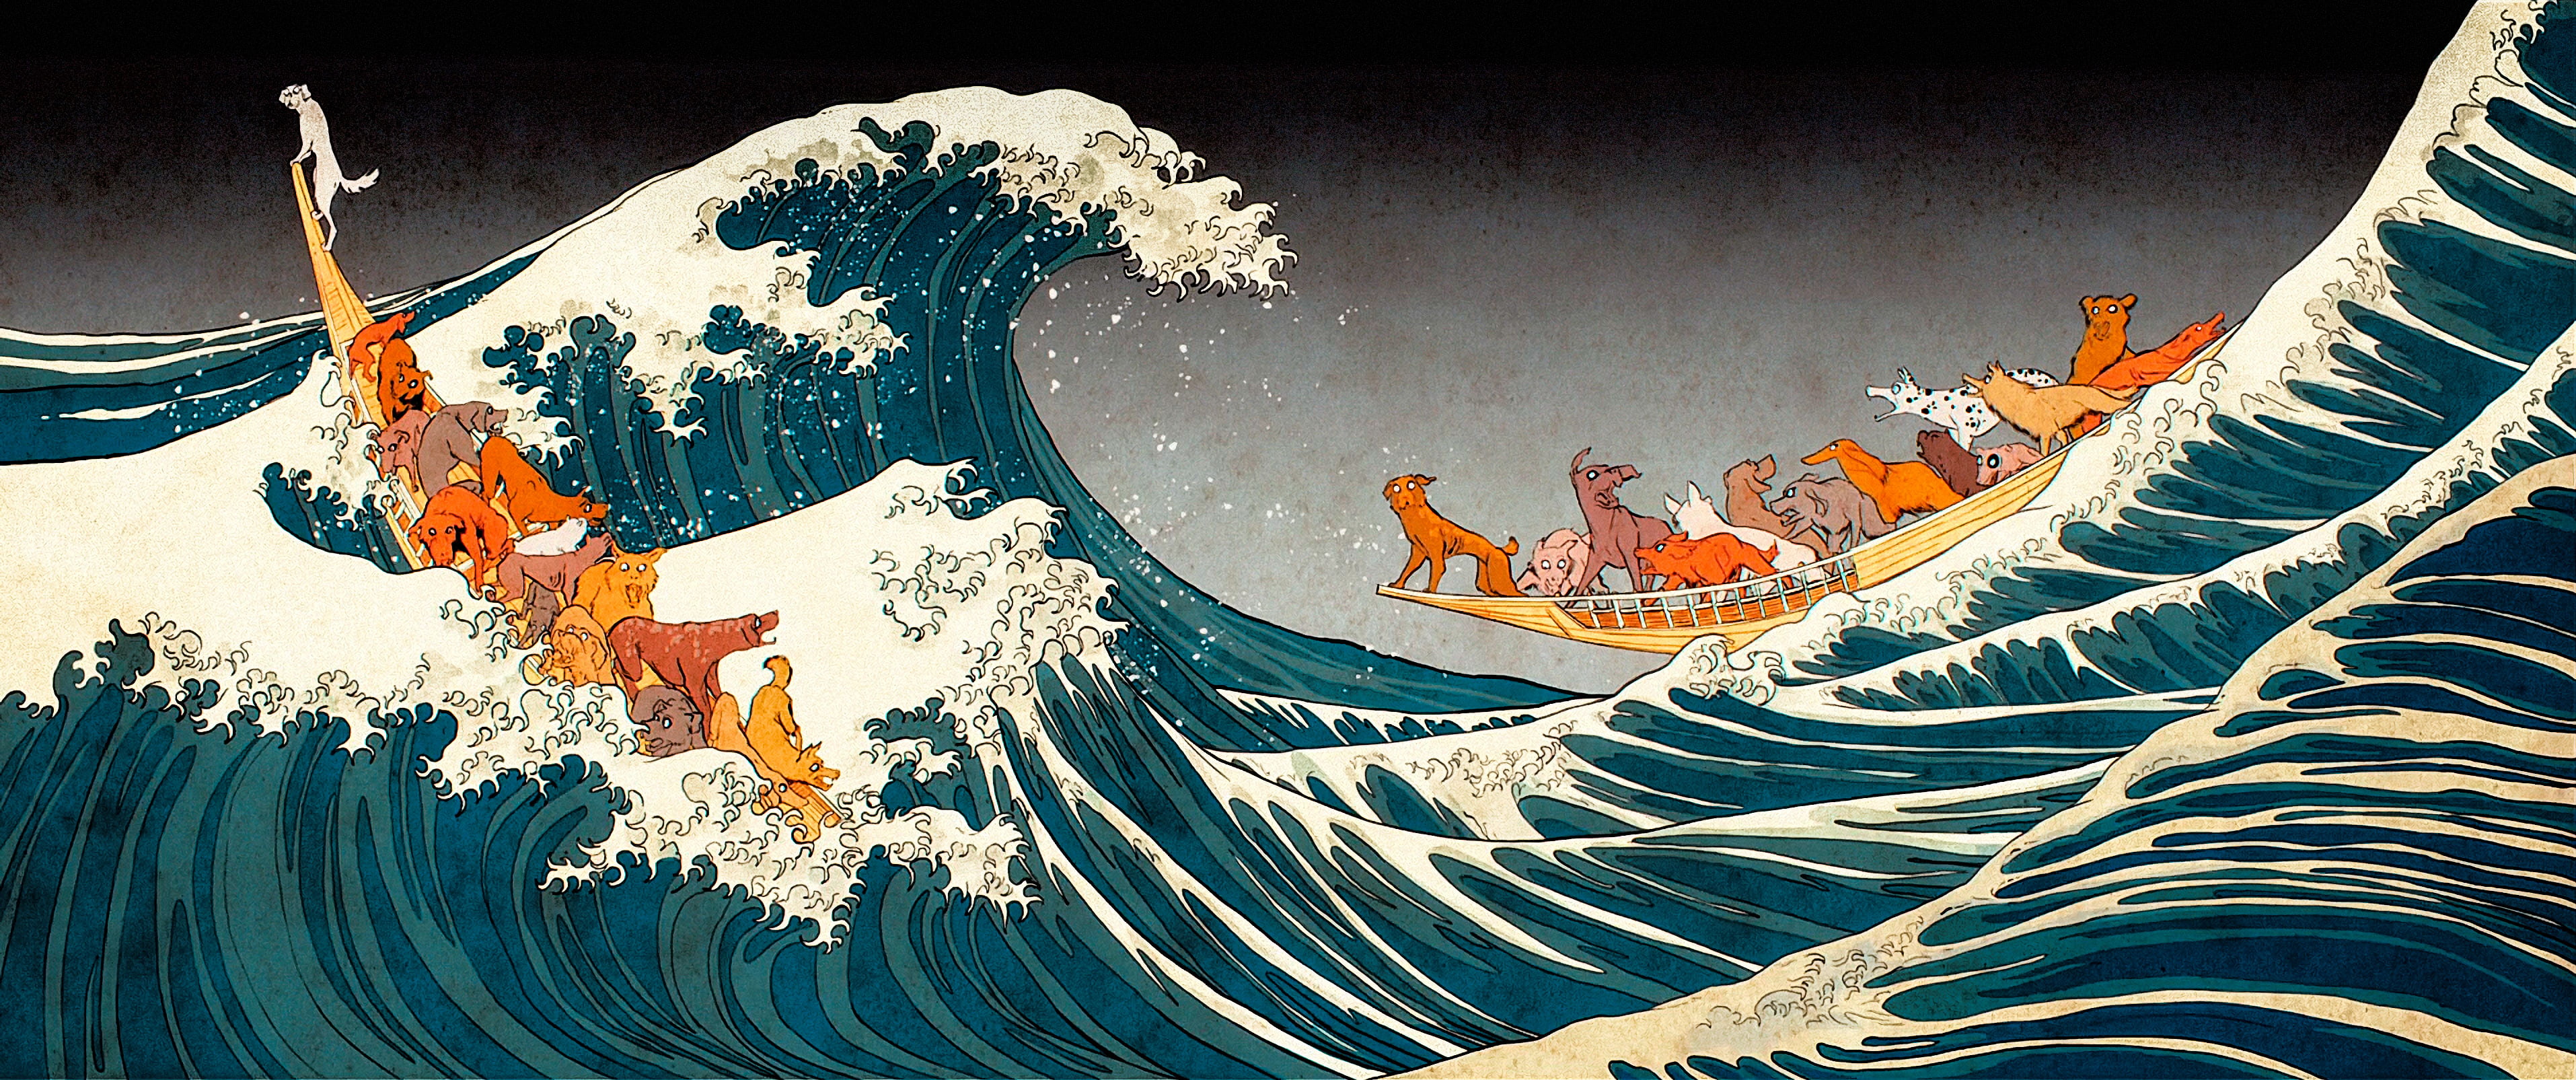 The Great Wave Of Kanagawa By Hokusai Painting Isle Of Dogs